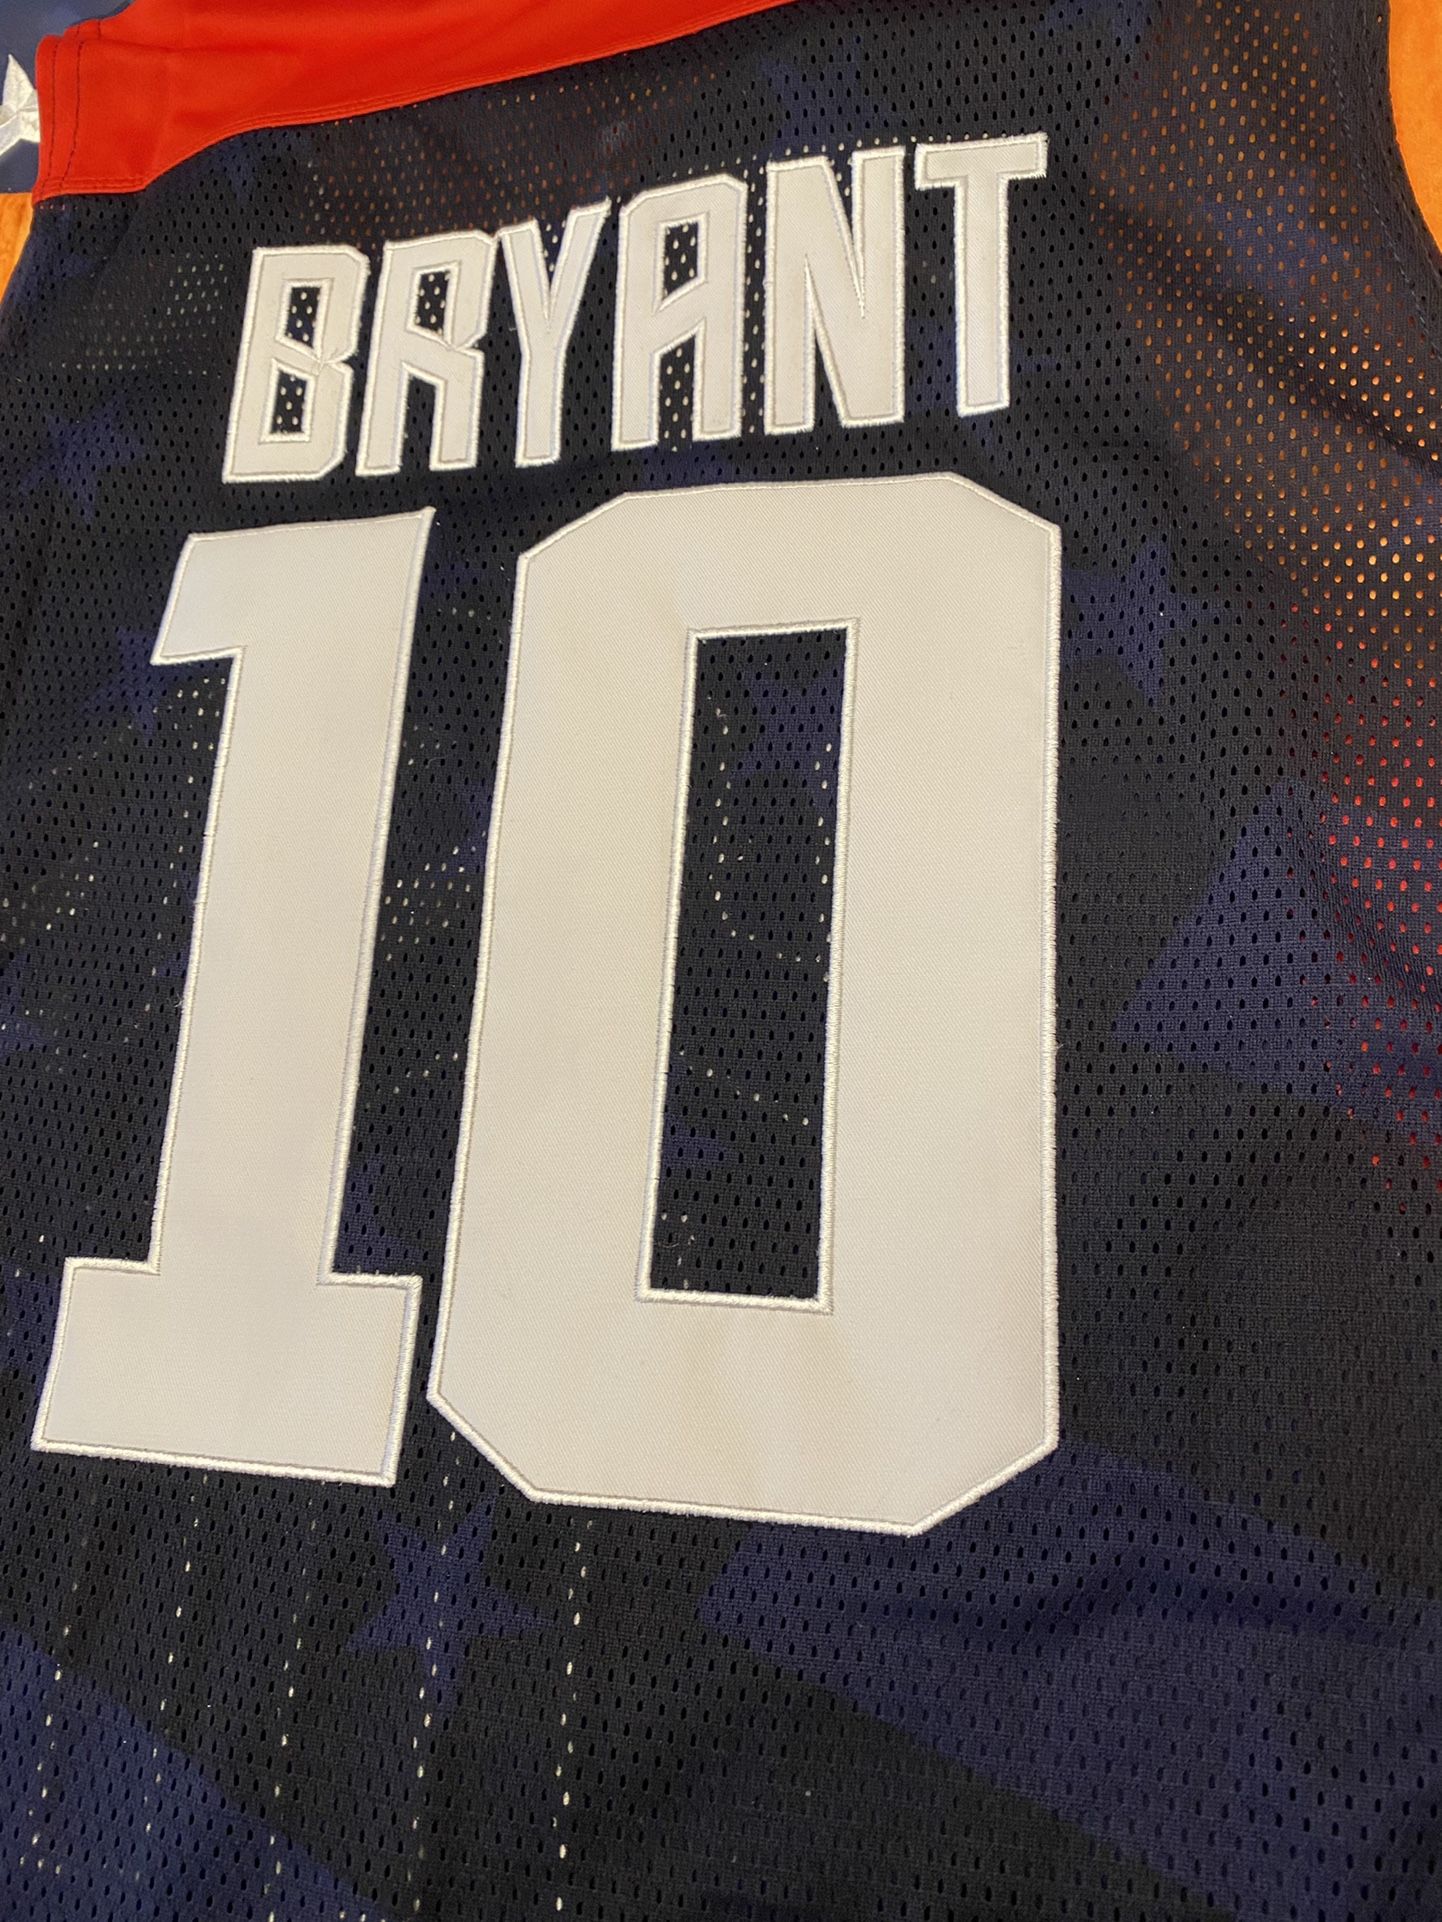 Kobe Bryant Nike Dream Team USA Olympic #10 Basketball Jersey – Football  Patch King